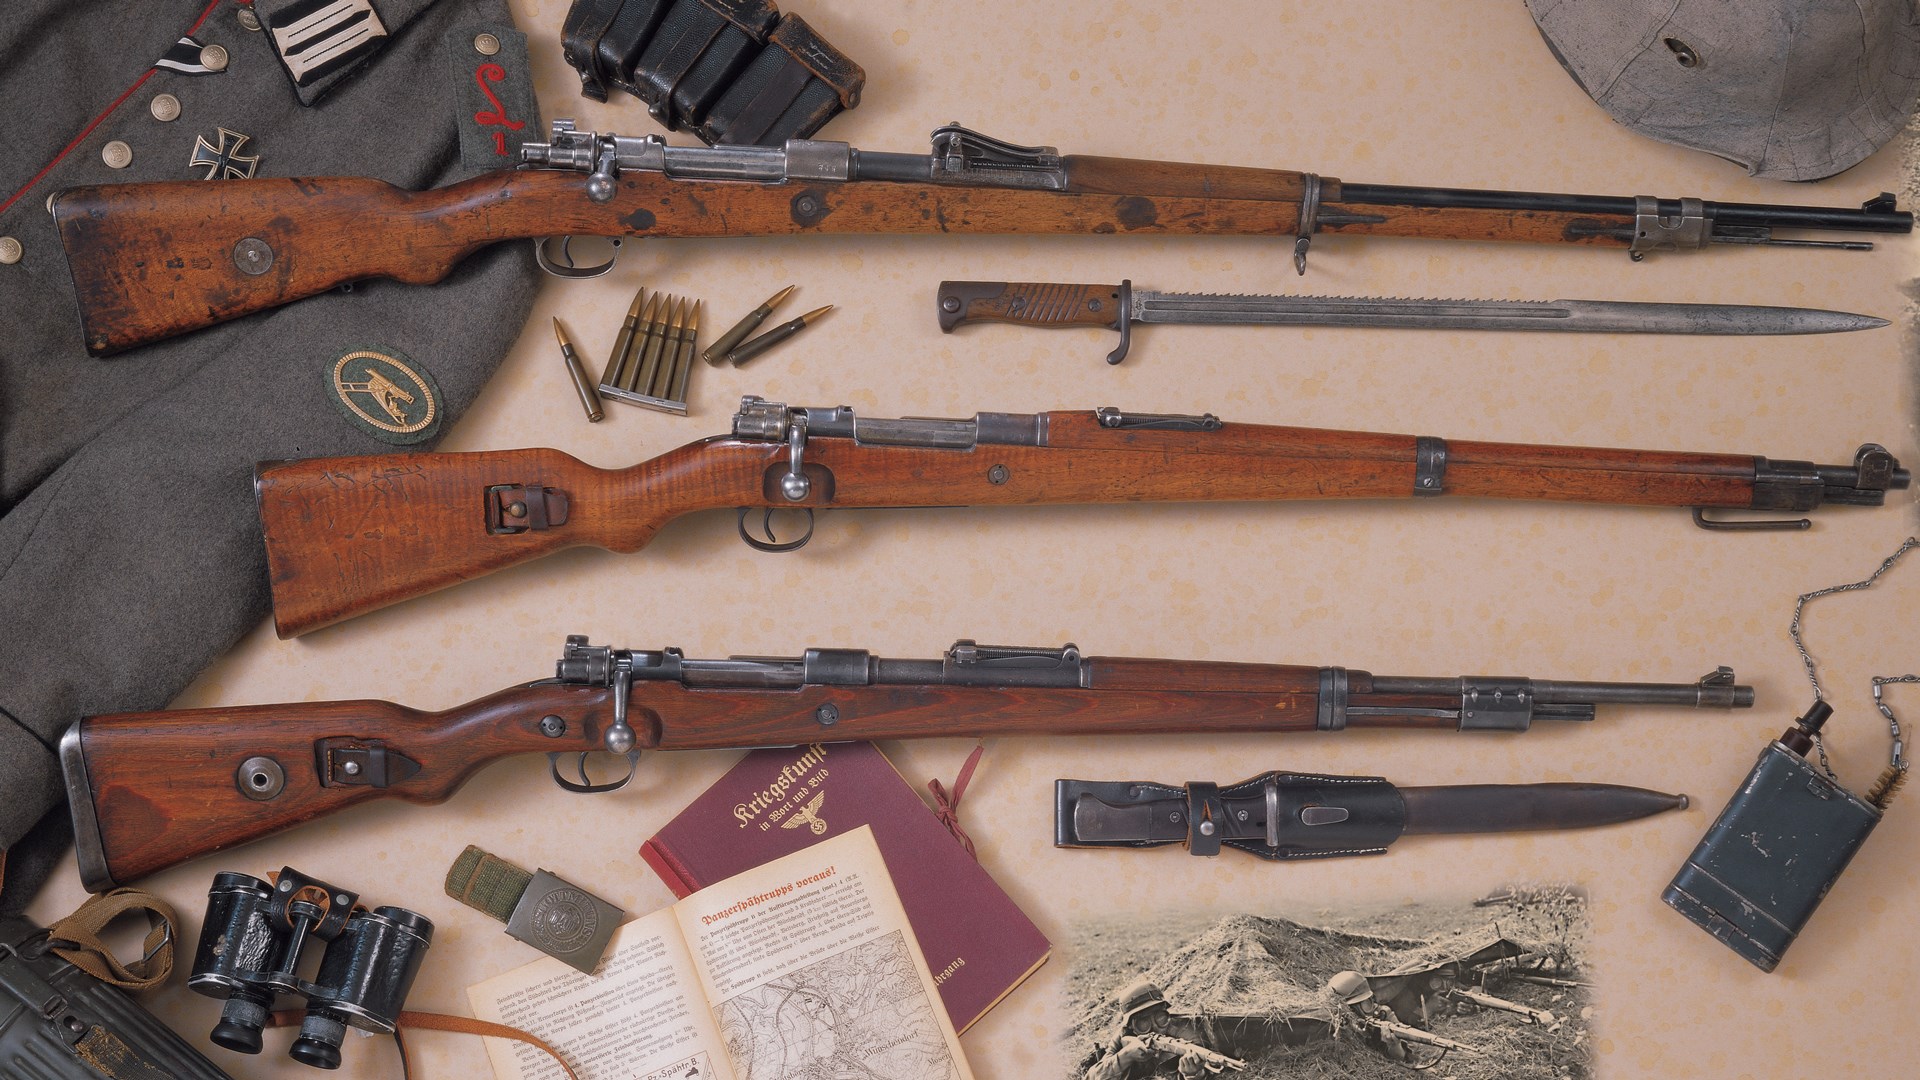 Three mauser bolt-action carbines arranged stack with ammunition uniform binoculars hat bayonet blade book